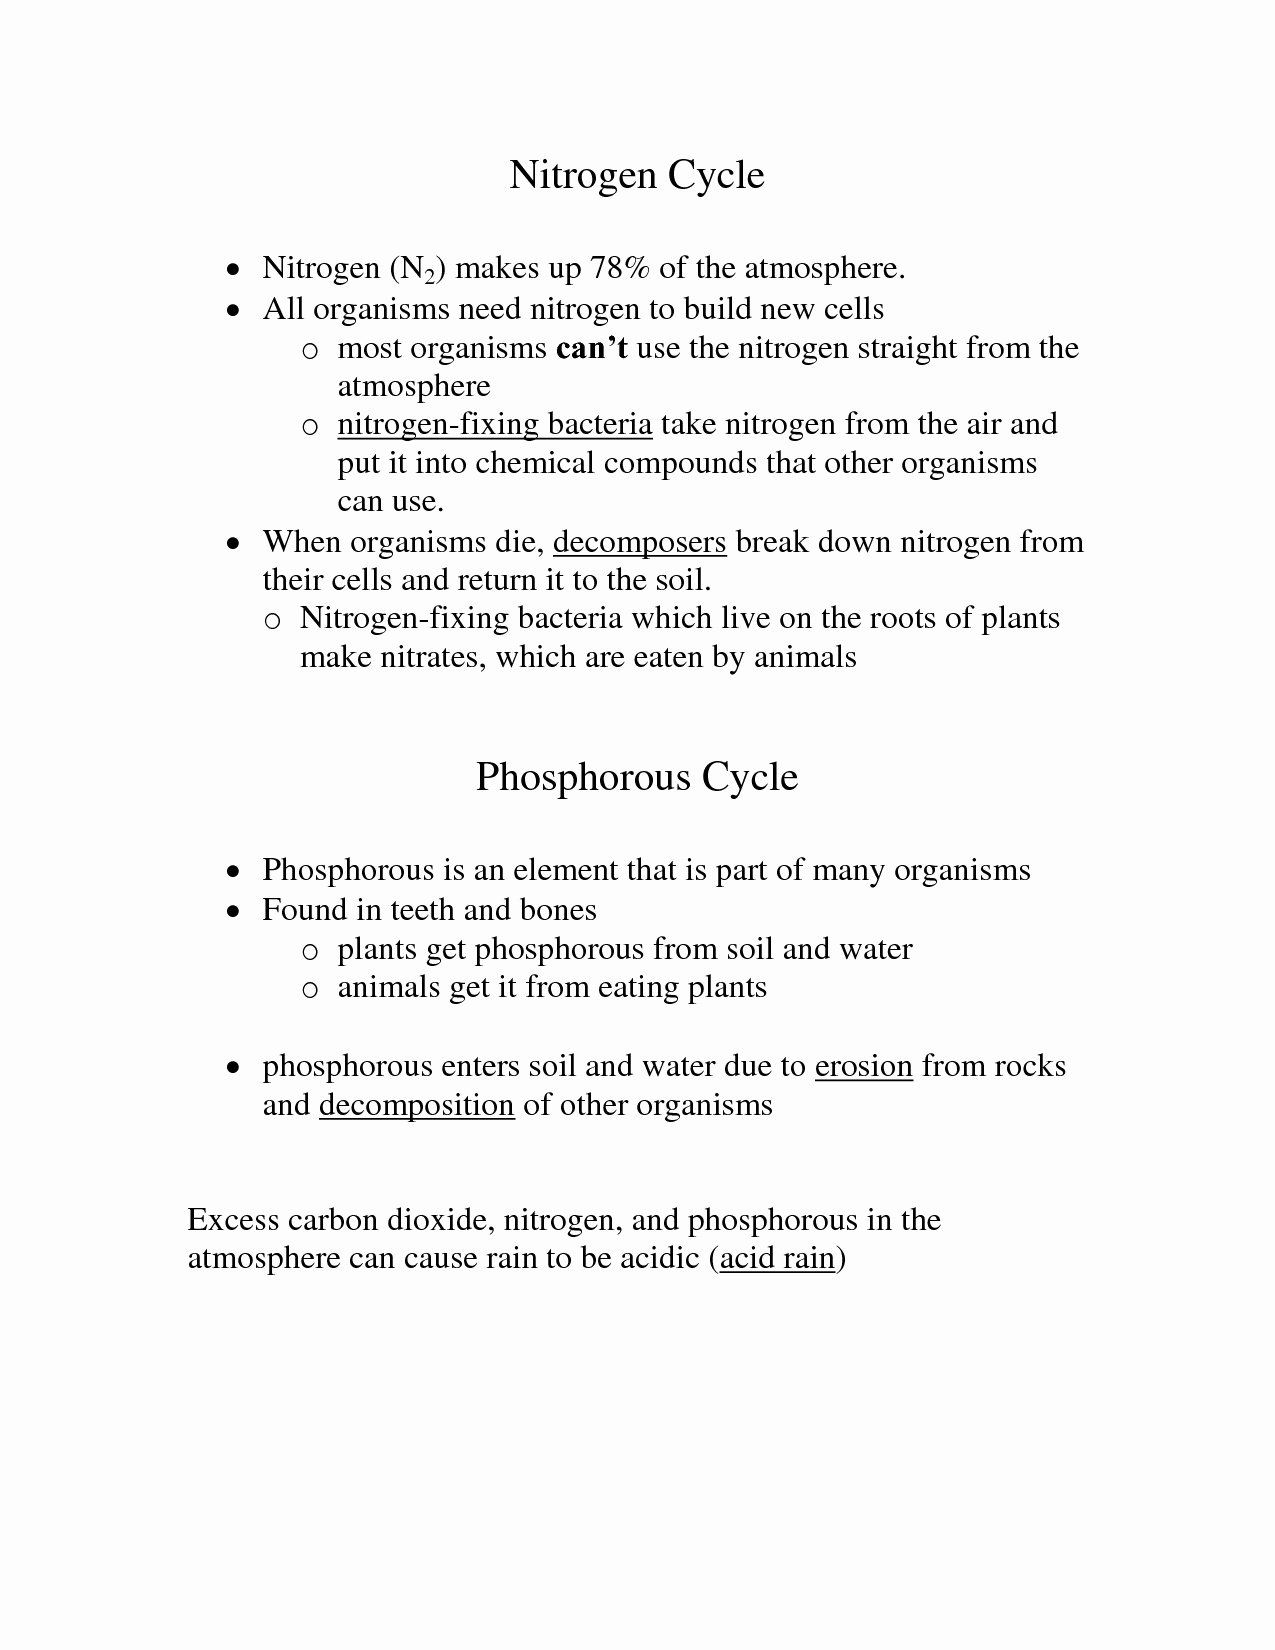 Biogeochemical Cycles Worksheet Answers Elegant Nitrogen Cycle Worksheet for High School Nitrogen Best